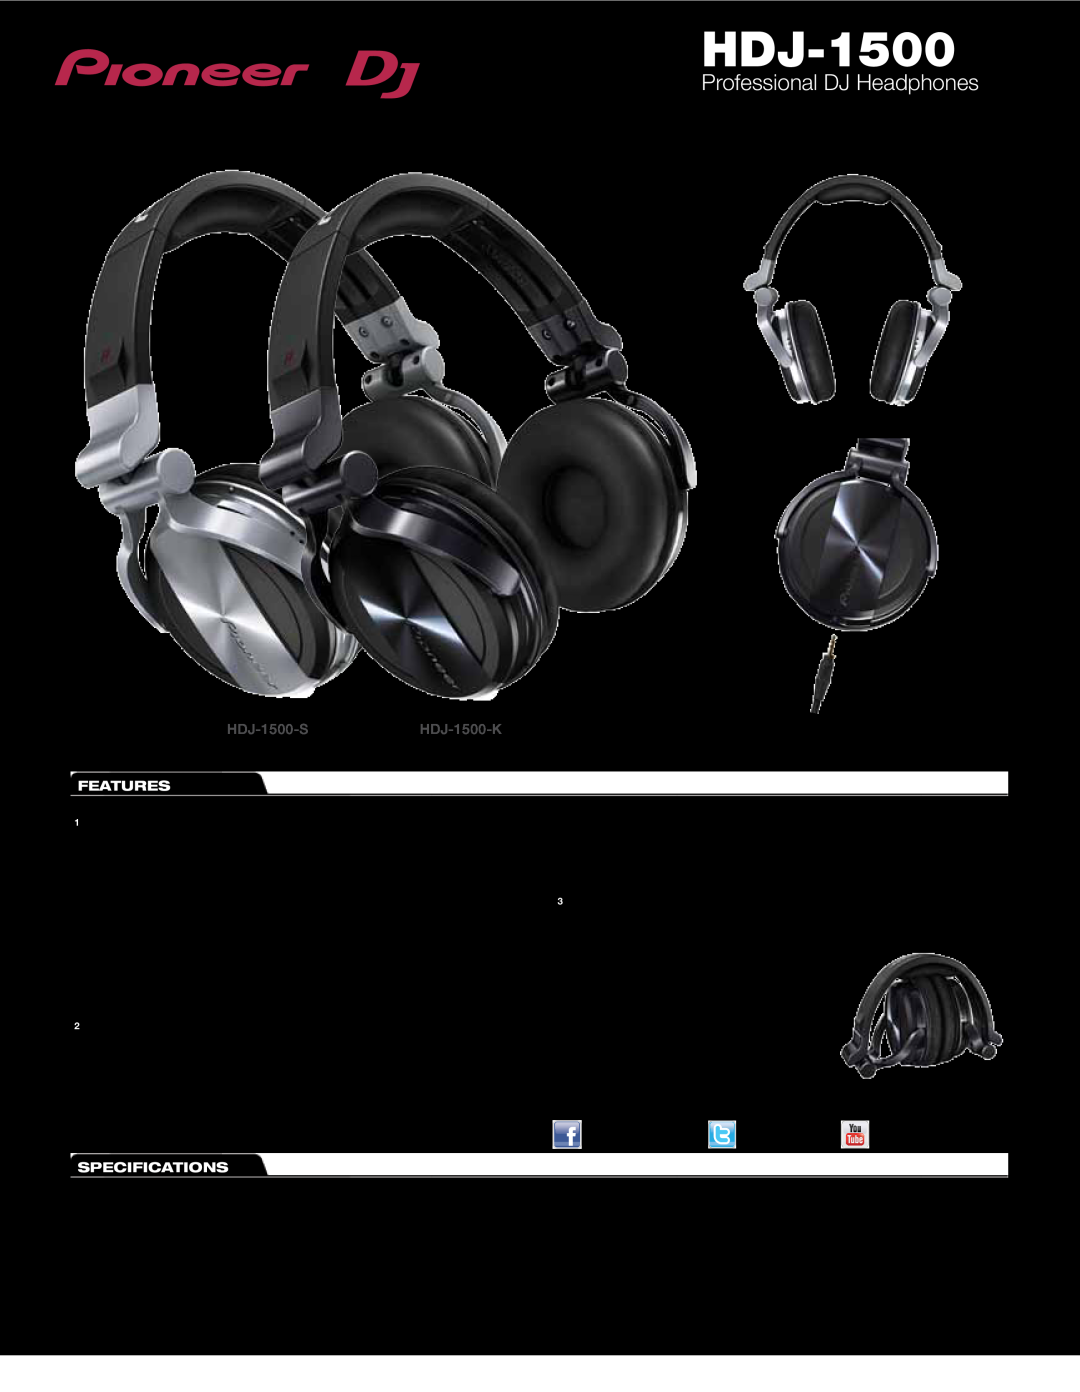 Pioneer Professional DJ Headphones, HDJ-1500-SHDJ-1500-K, Features, 1Designed For Both Playability And Performance 